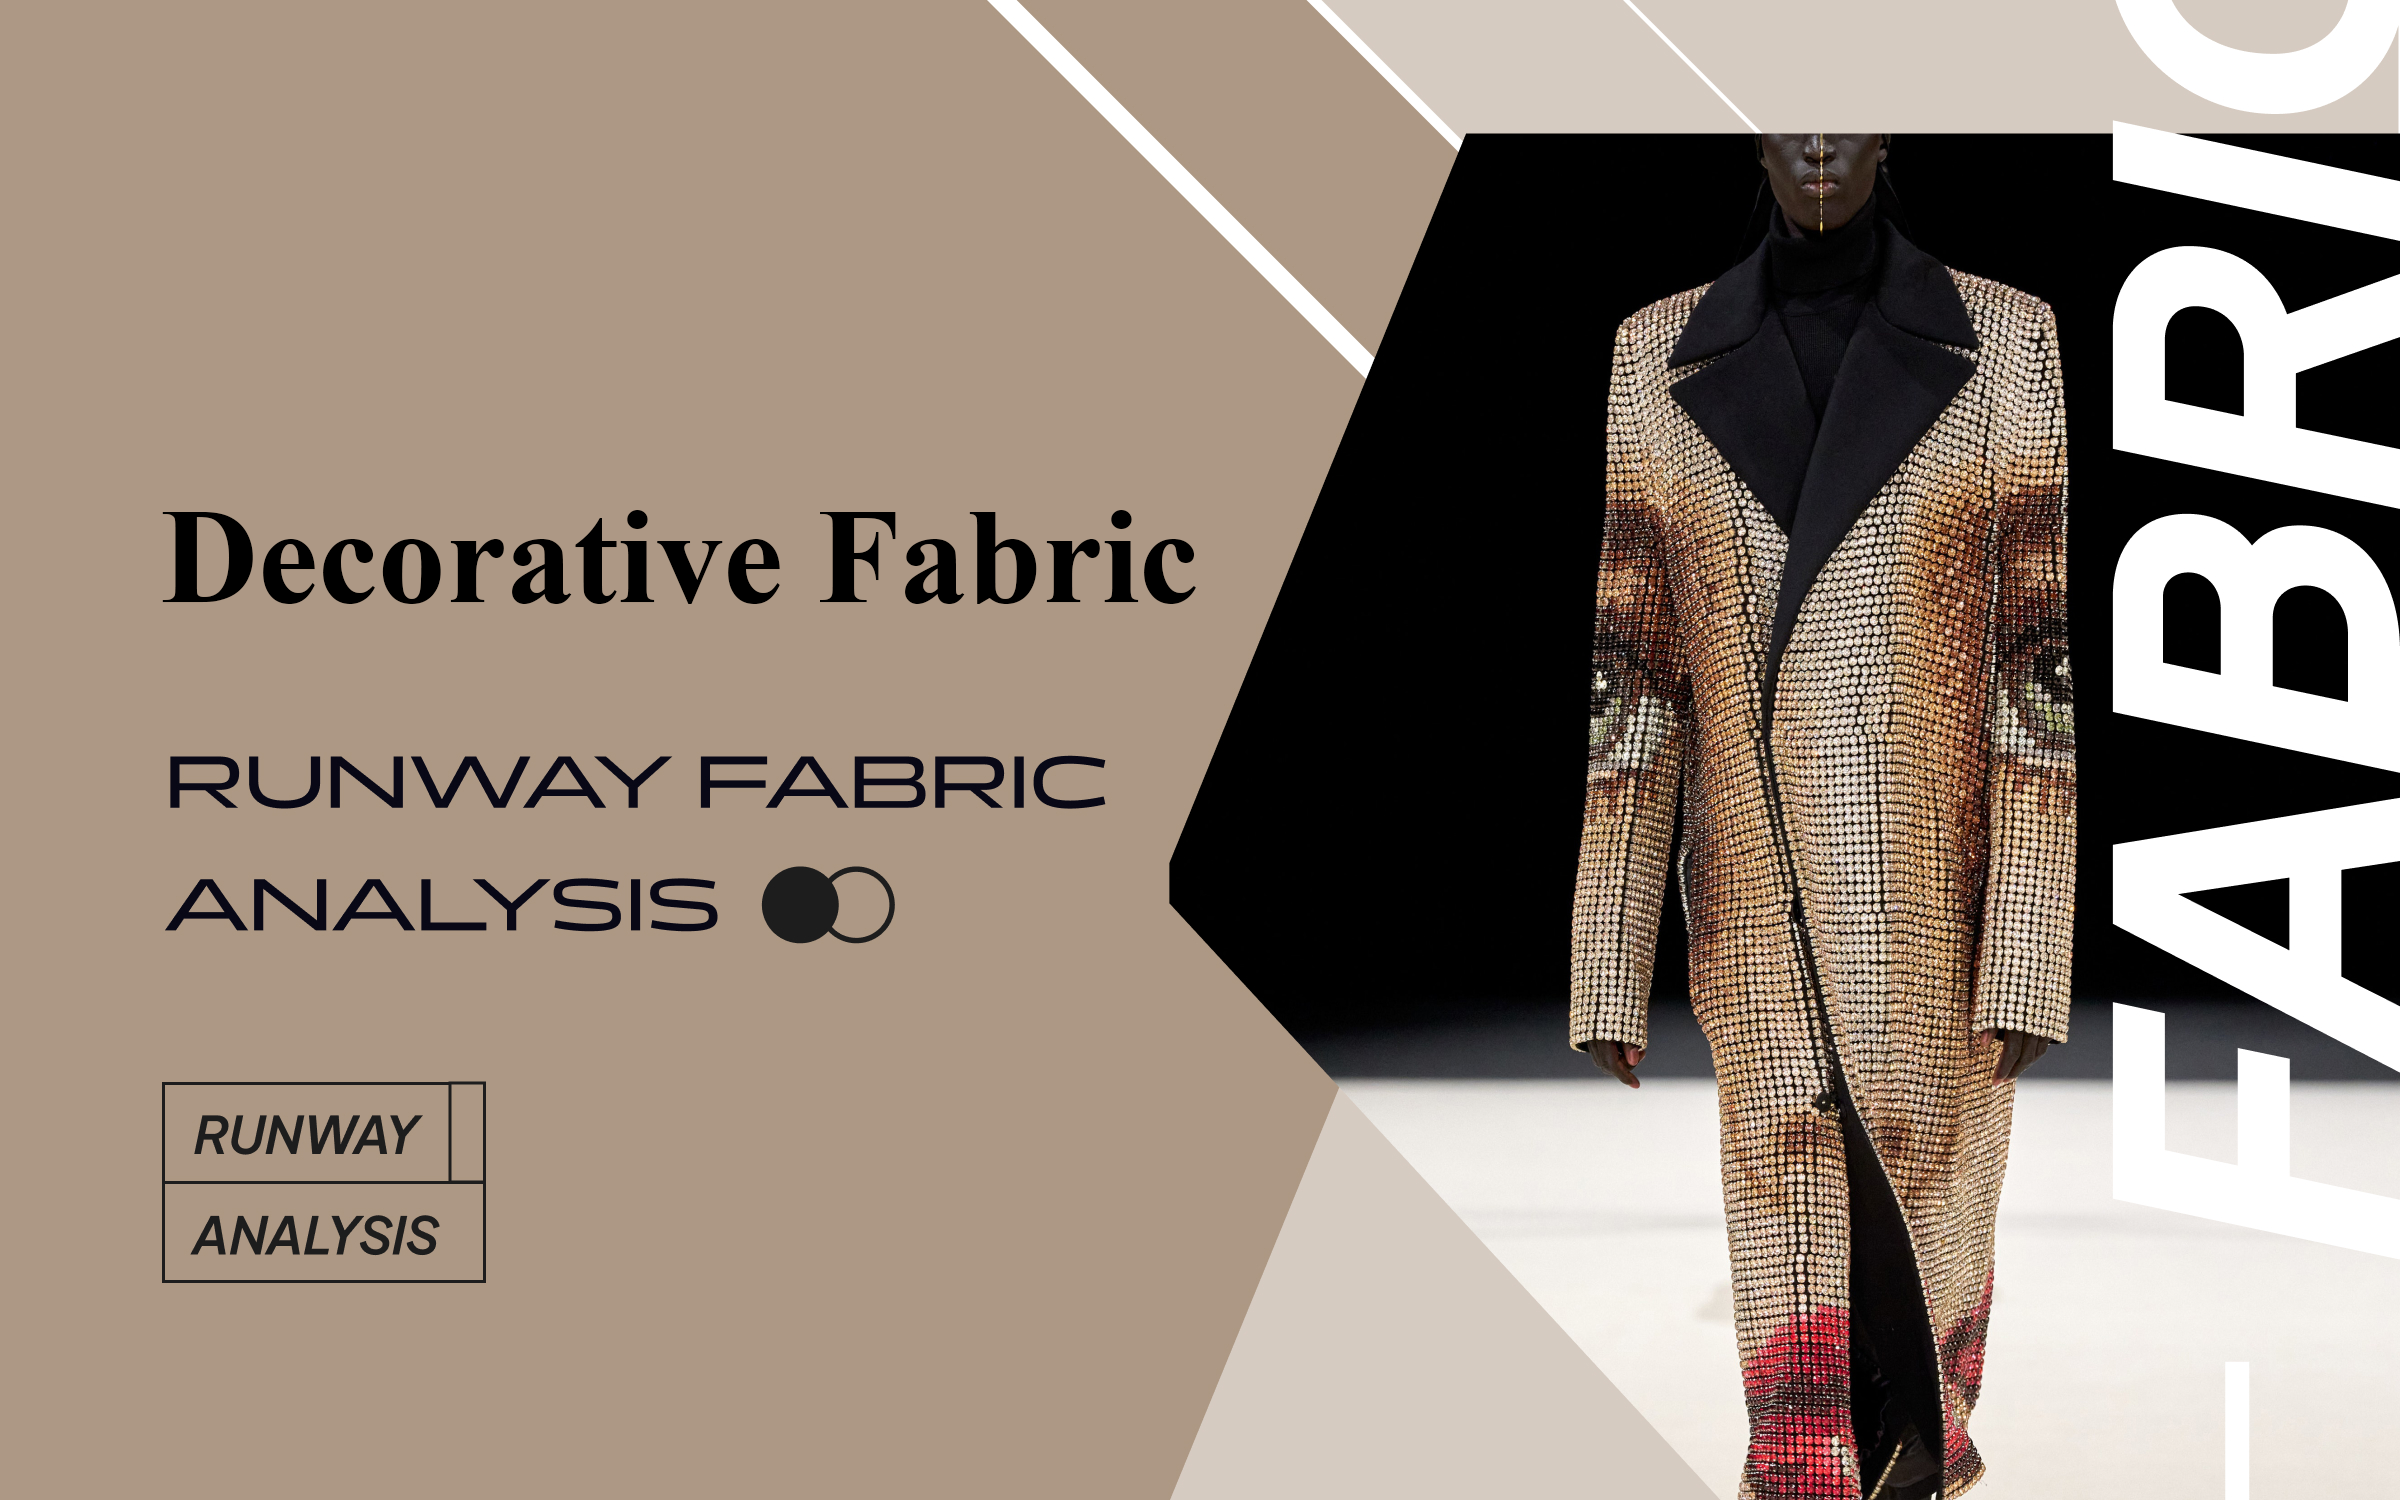 Decorative Fabric -- The Comprehensive Analysis of Men's Runway